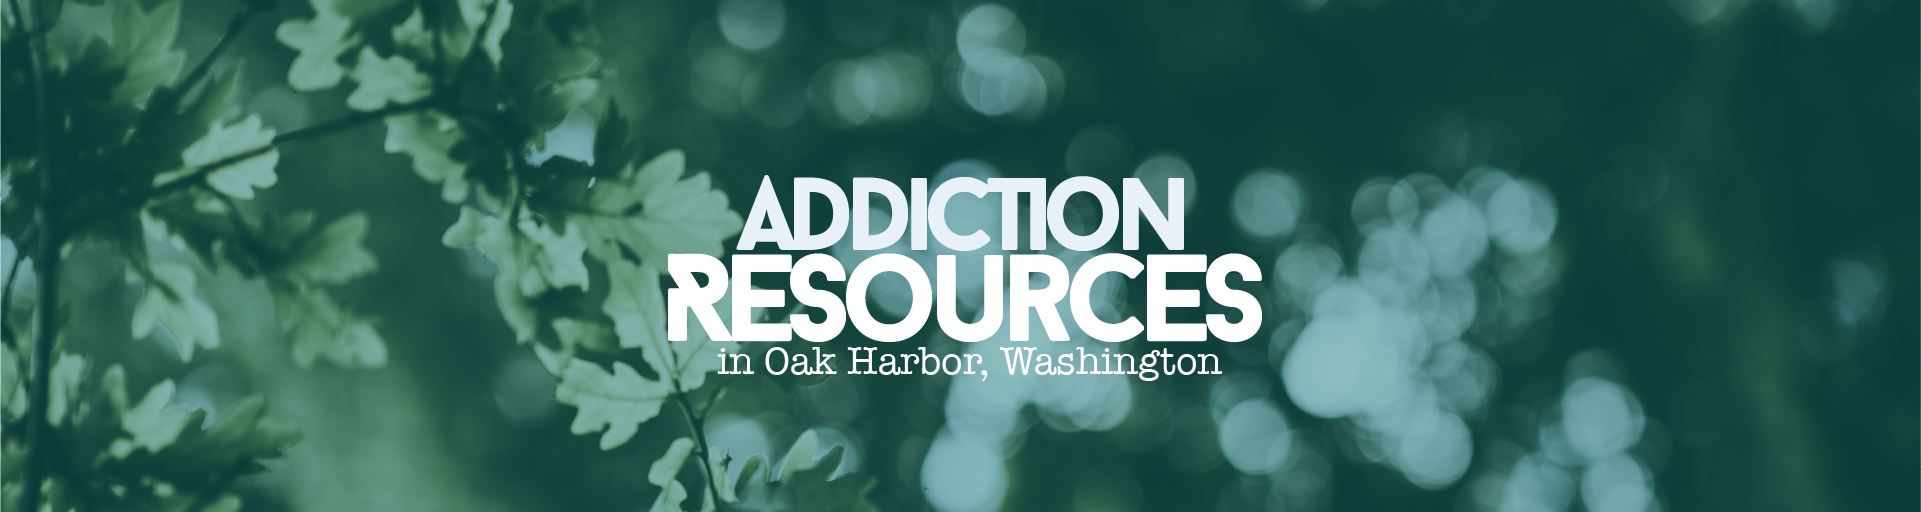 Oak harbor, WA Addiction Resources